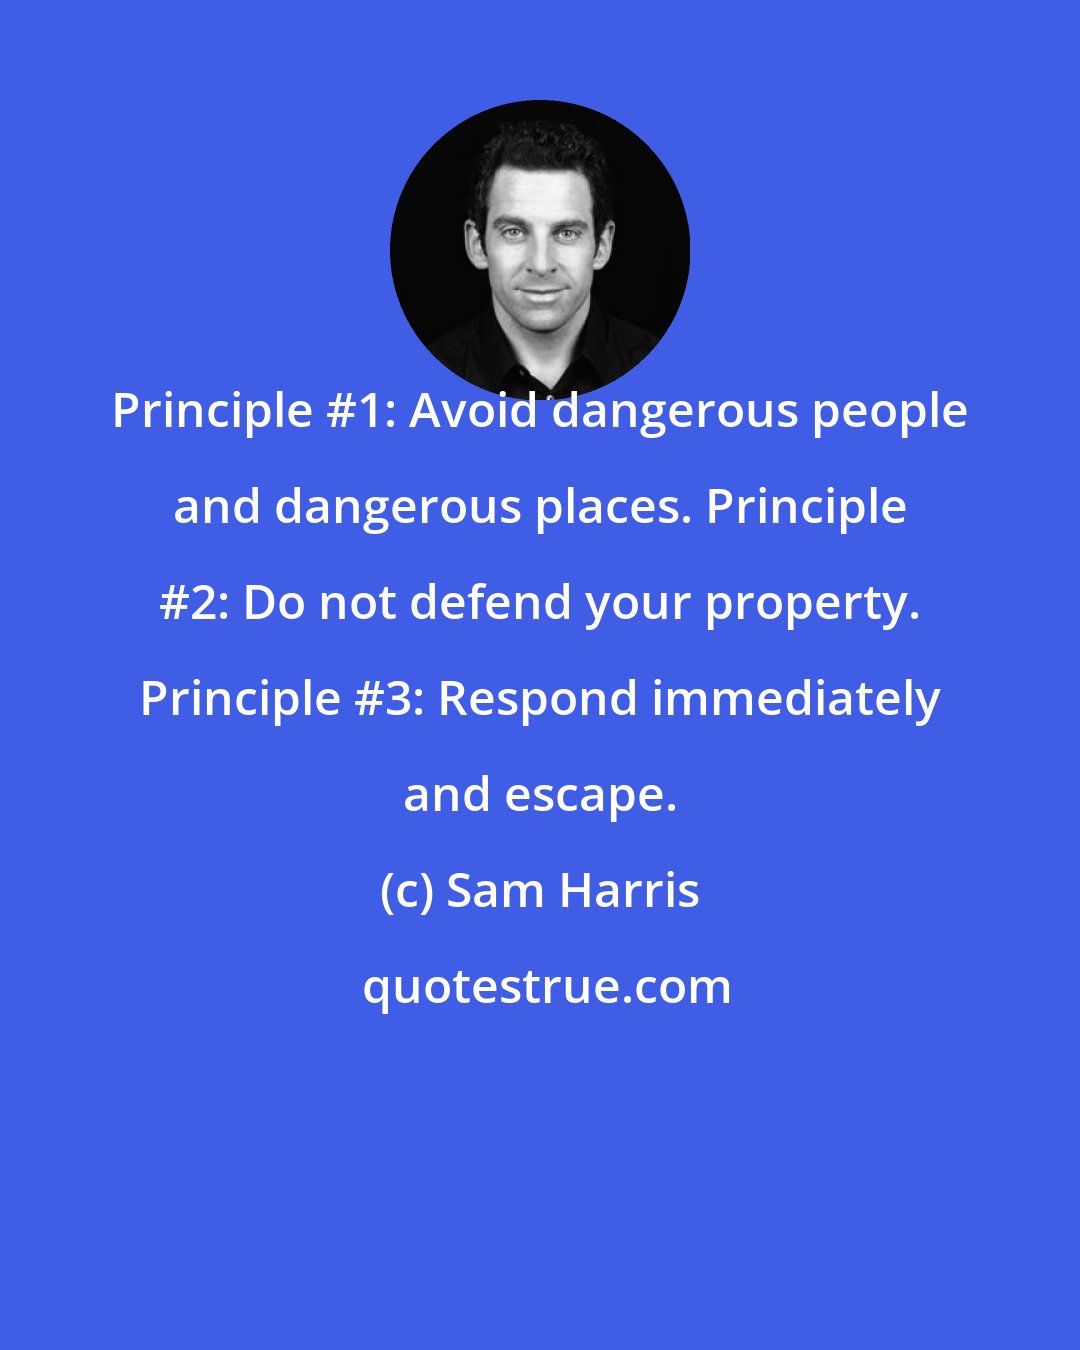 Sam Harris: Principle #1: Avoid dangerous people and dangerous places. Principle #2: Do not defend your property. Principle #3: Respond immediately and escape.